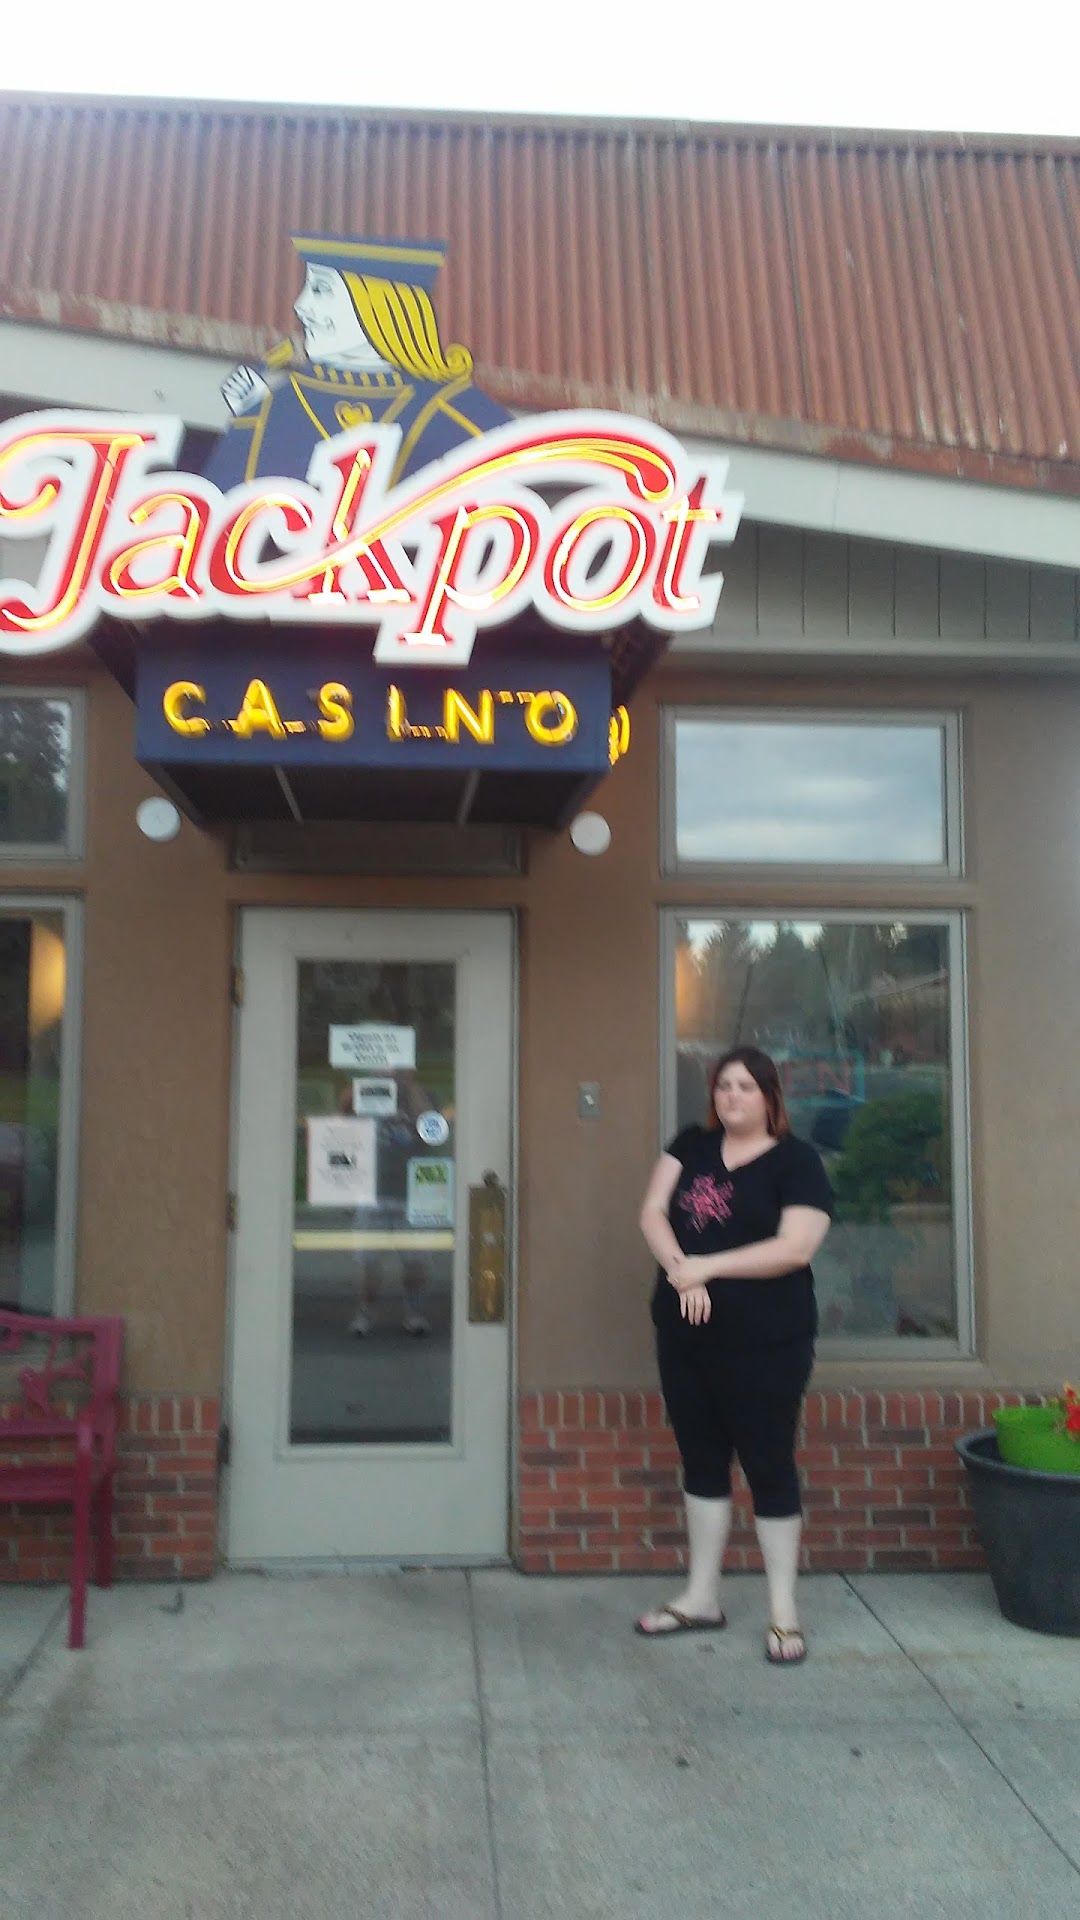 Jackpot Casino East